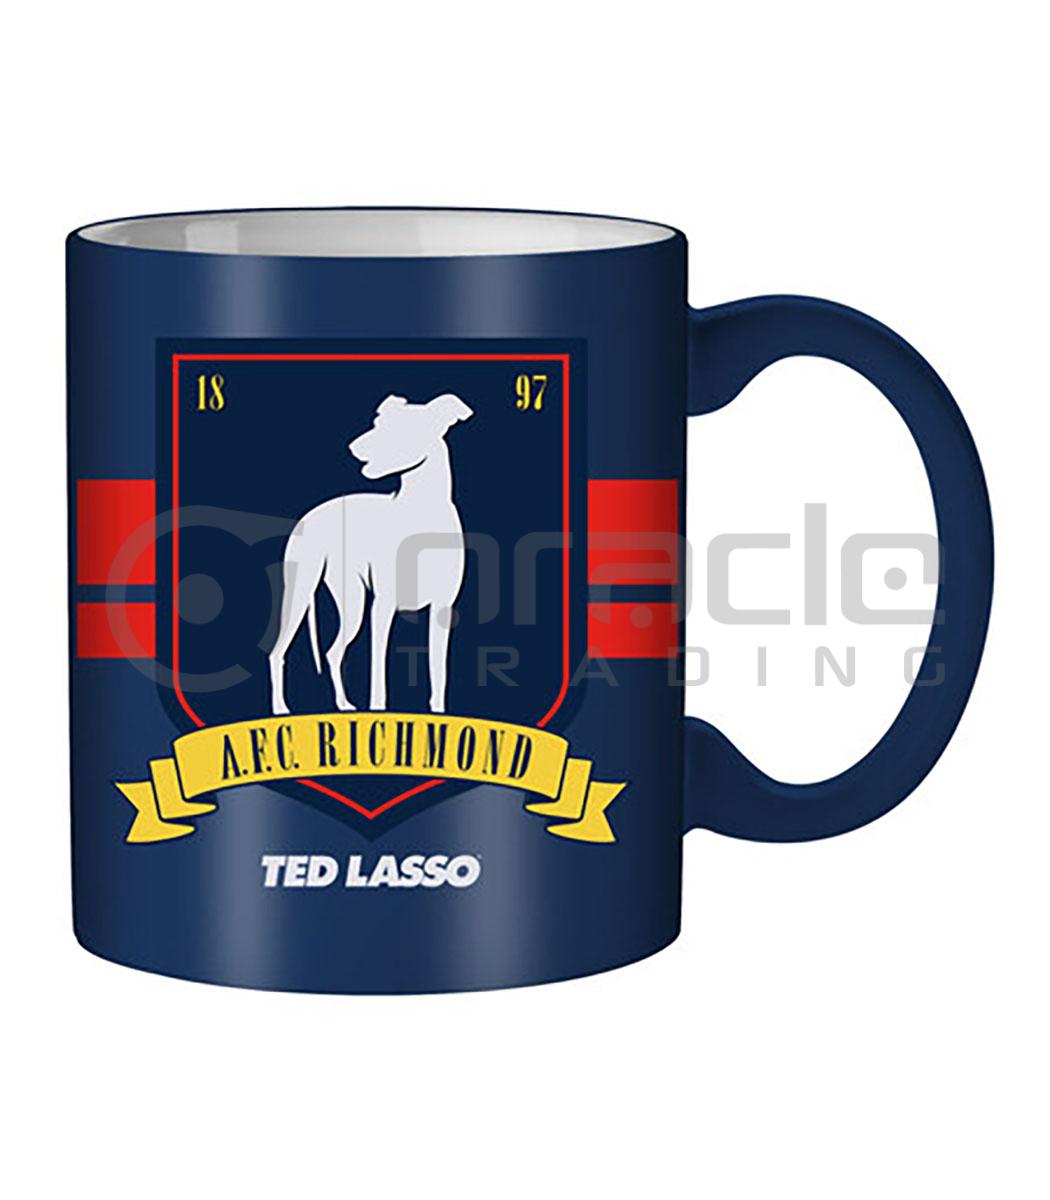 Ted Lasso Jumbo Mug - Richmond Crest